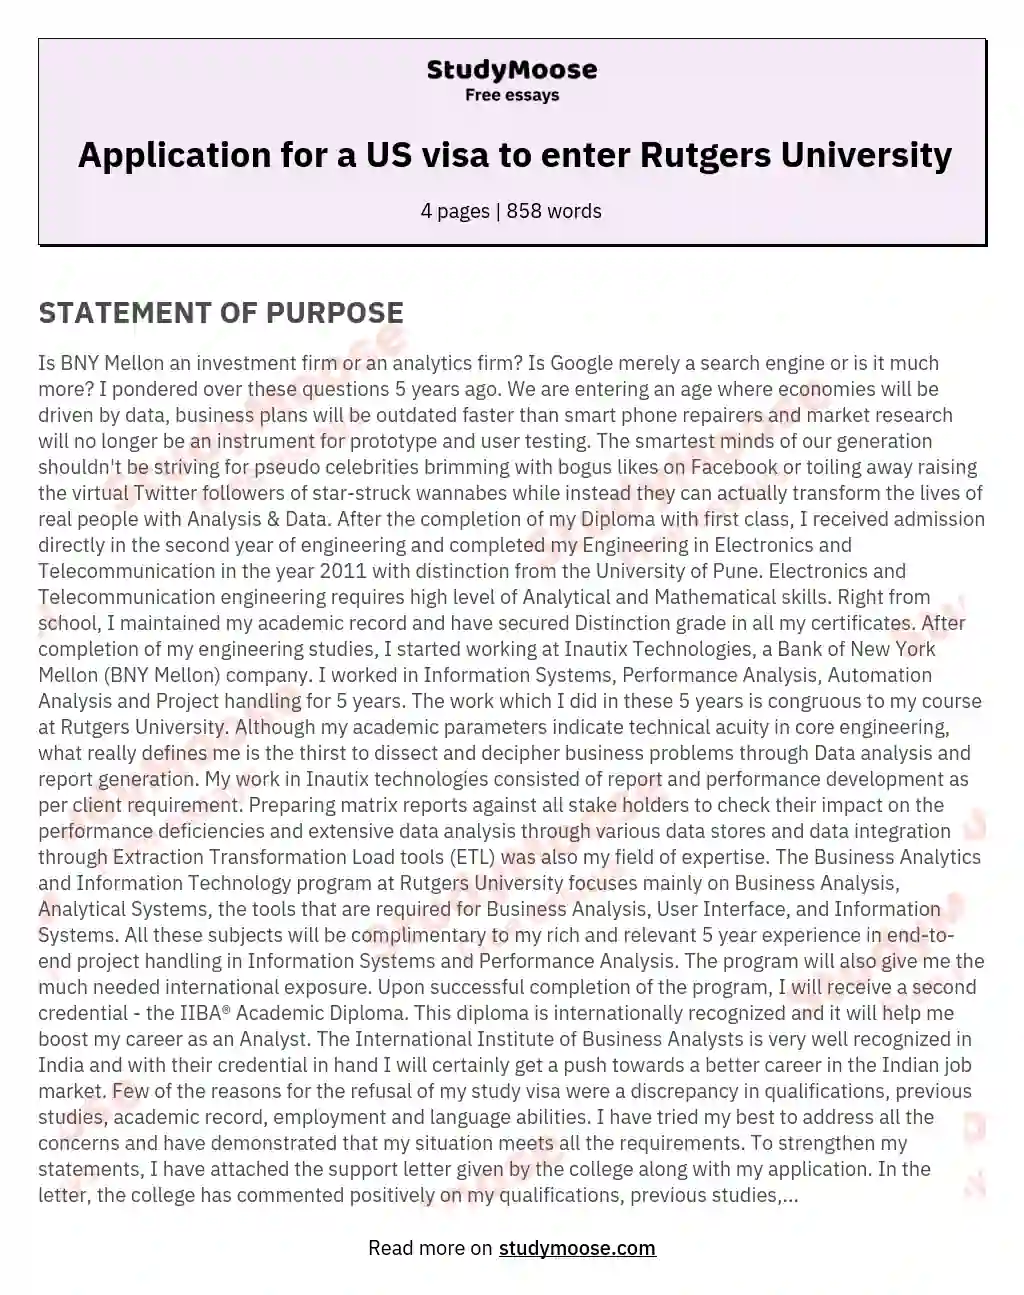 Application for a US visa to enter Rutgers University essay